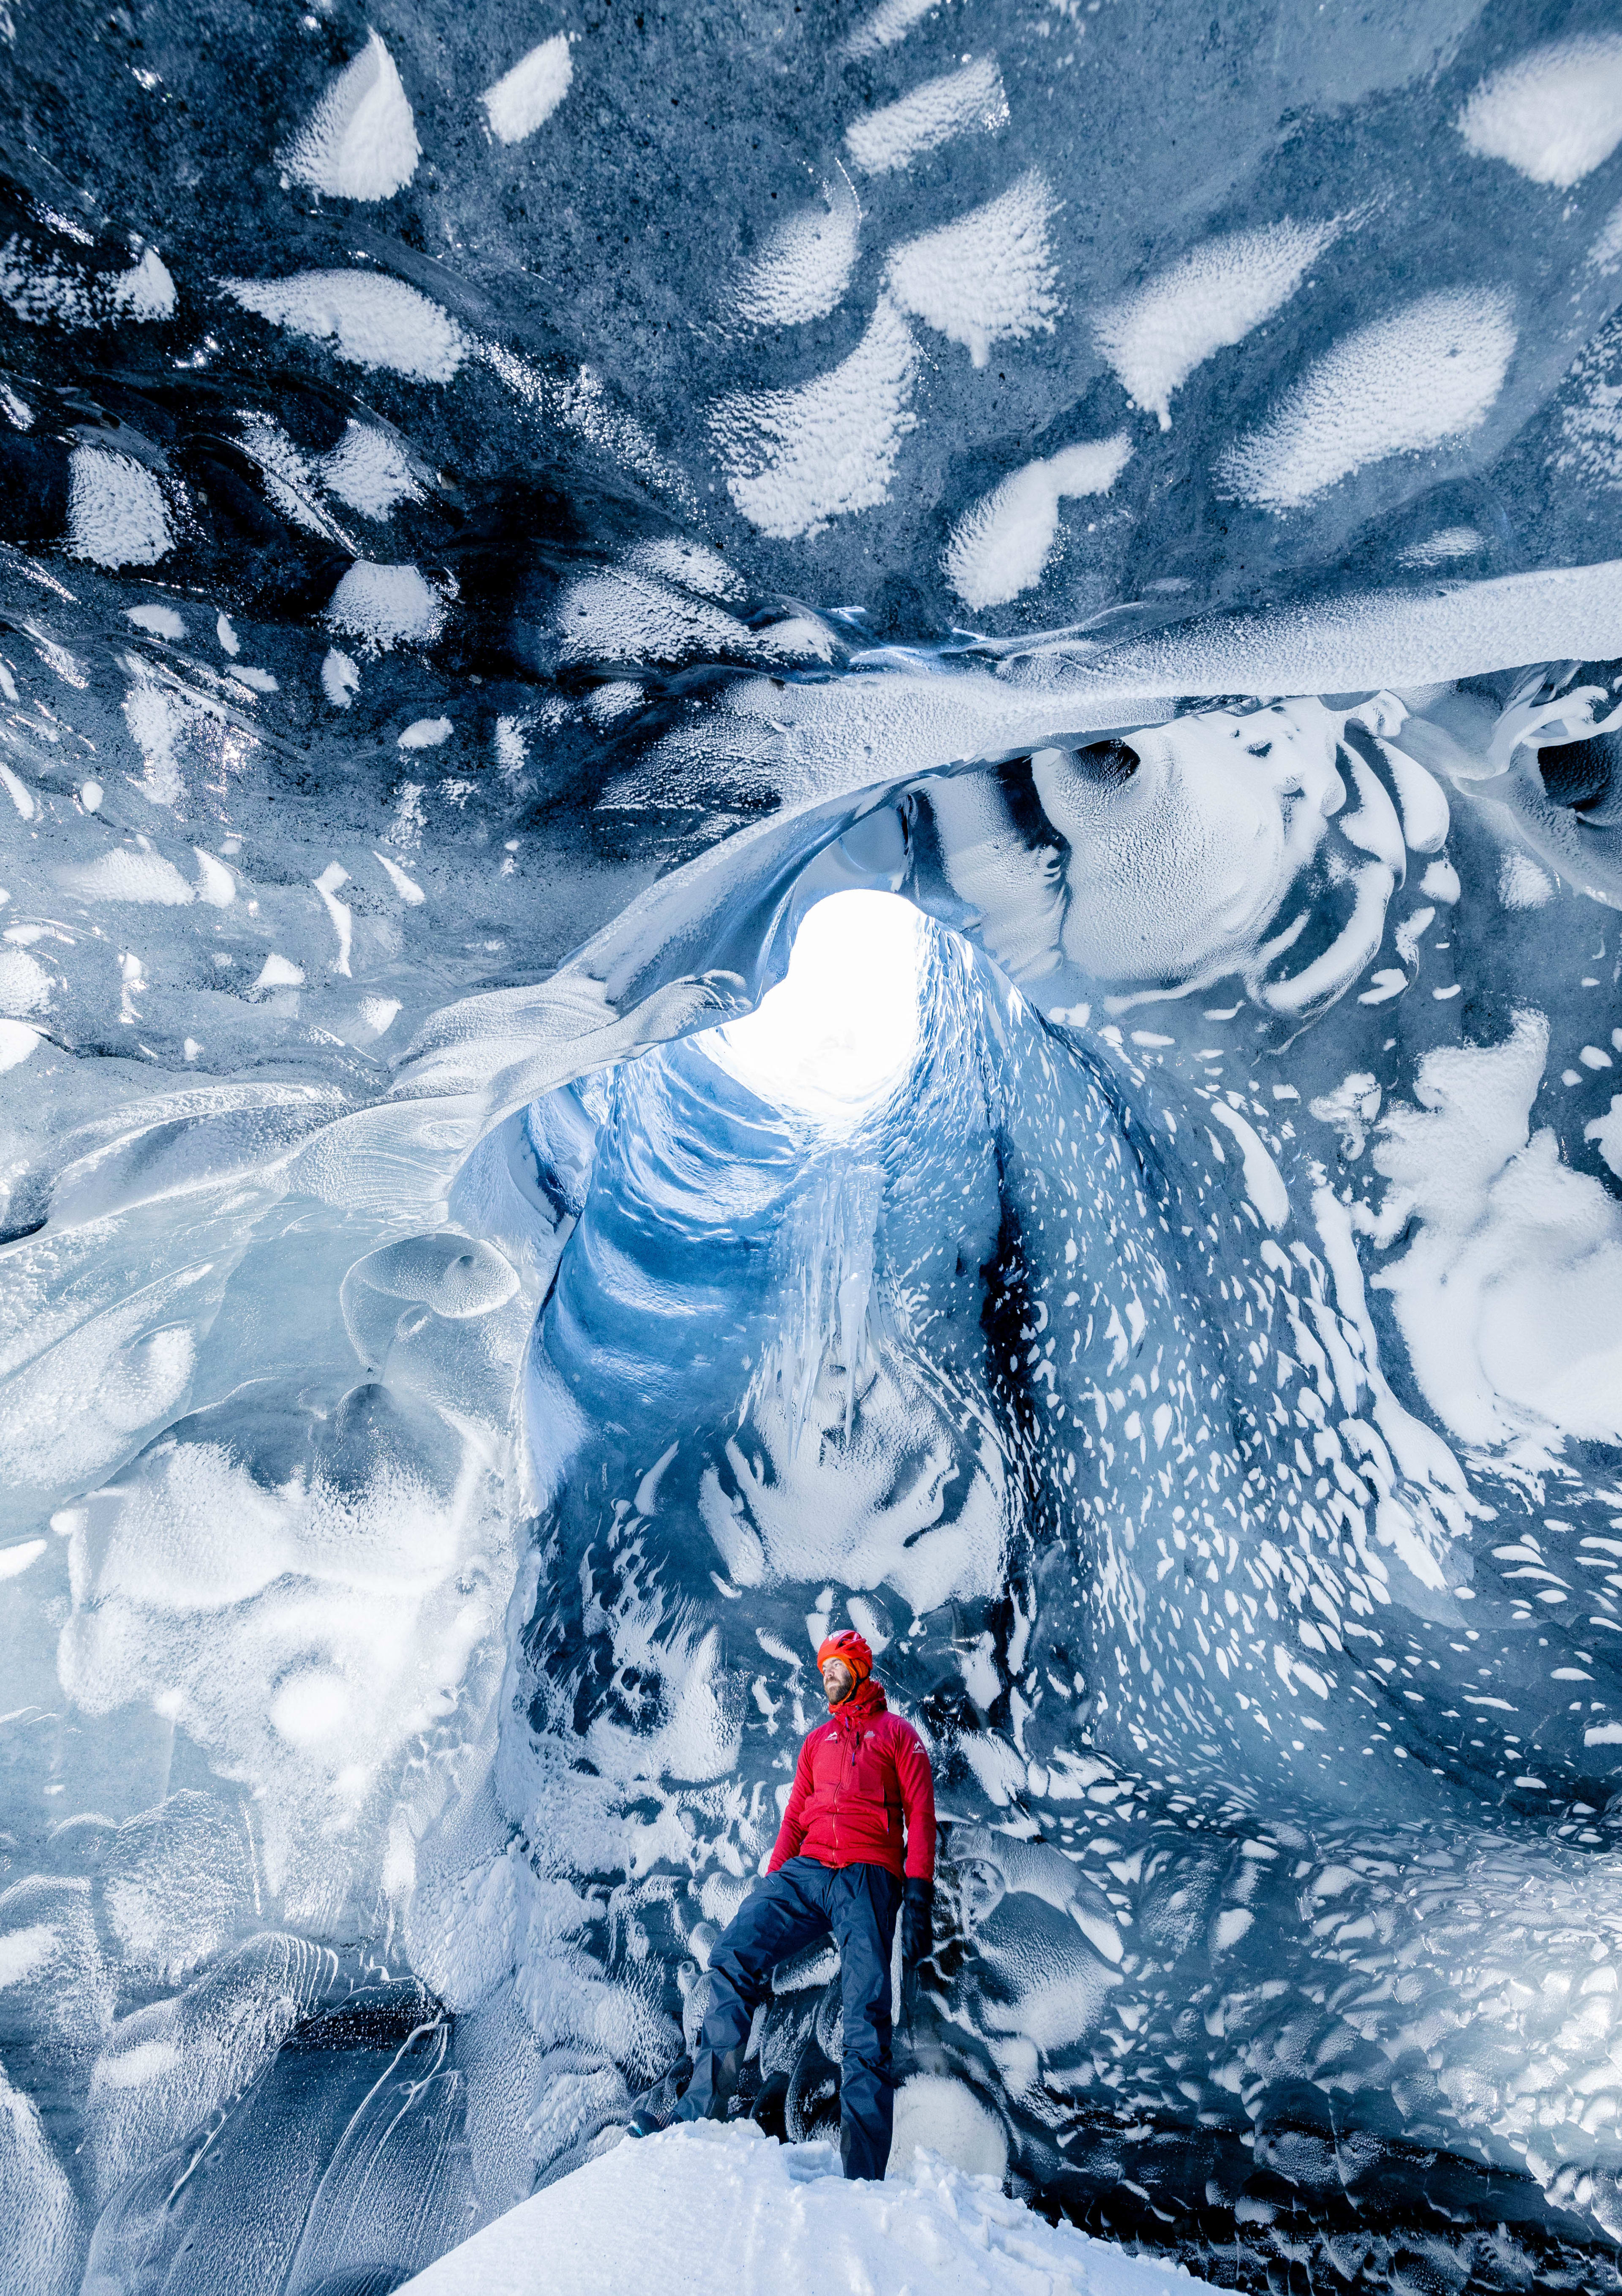 Myrdalsjokull ice cave